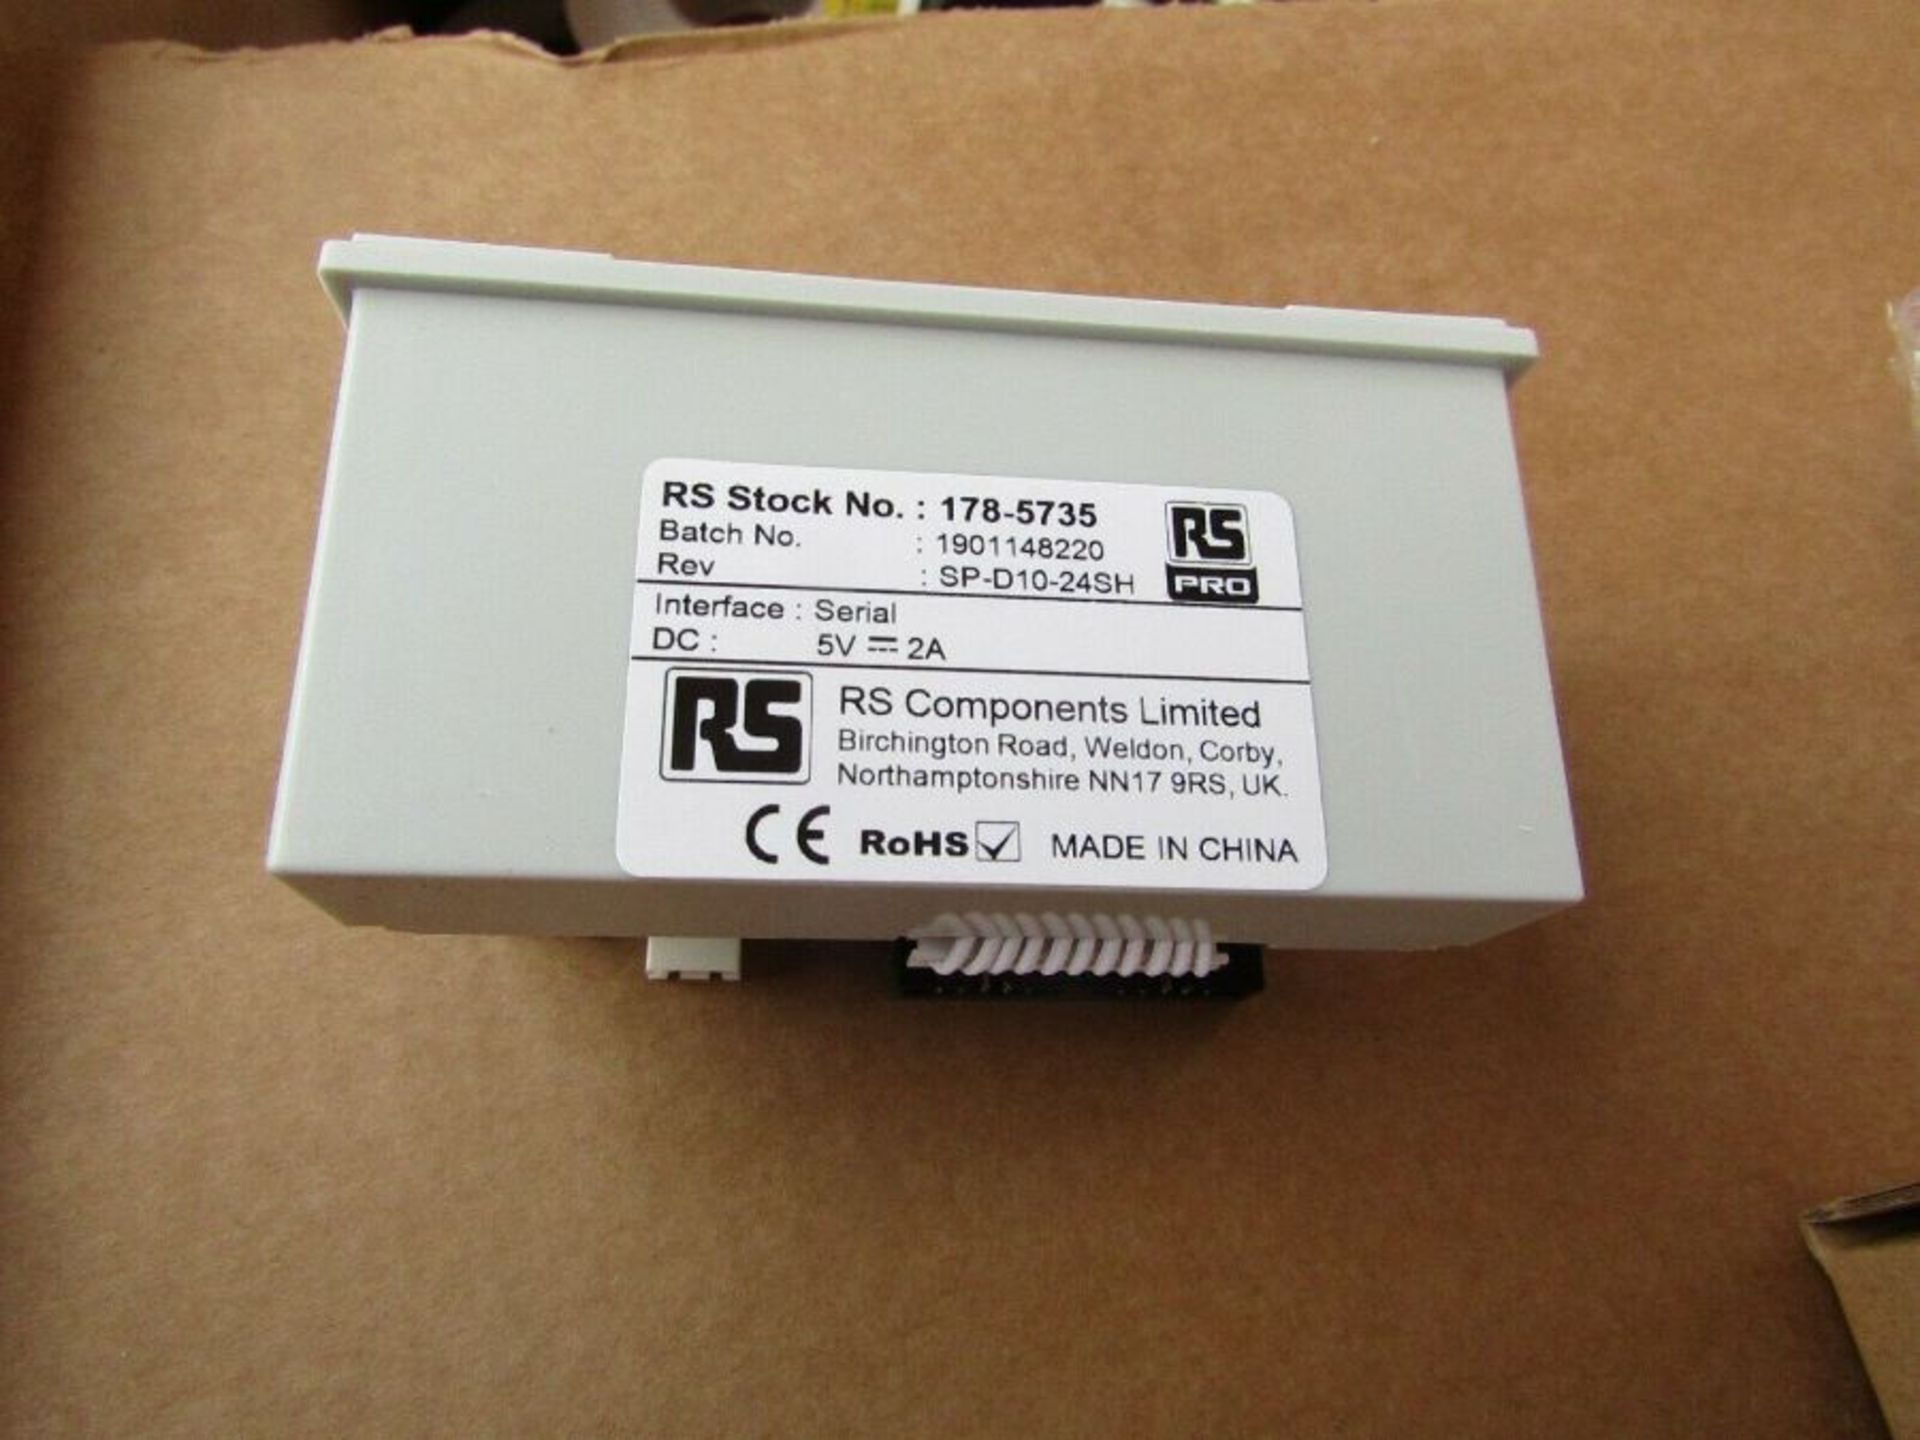 24 x RS PRO panel mount Dot Matrix printer - receipt ticket test equipment £2k retail J2 1785735 - Image 2 of 4